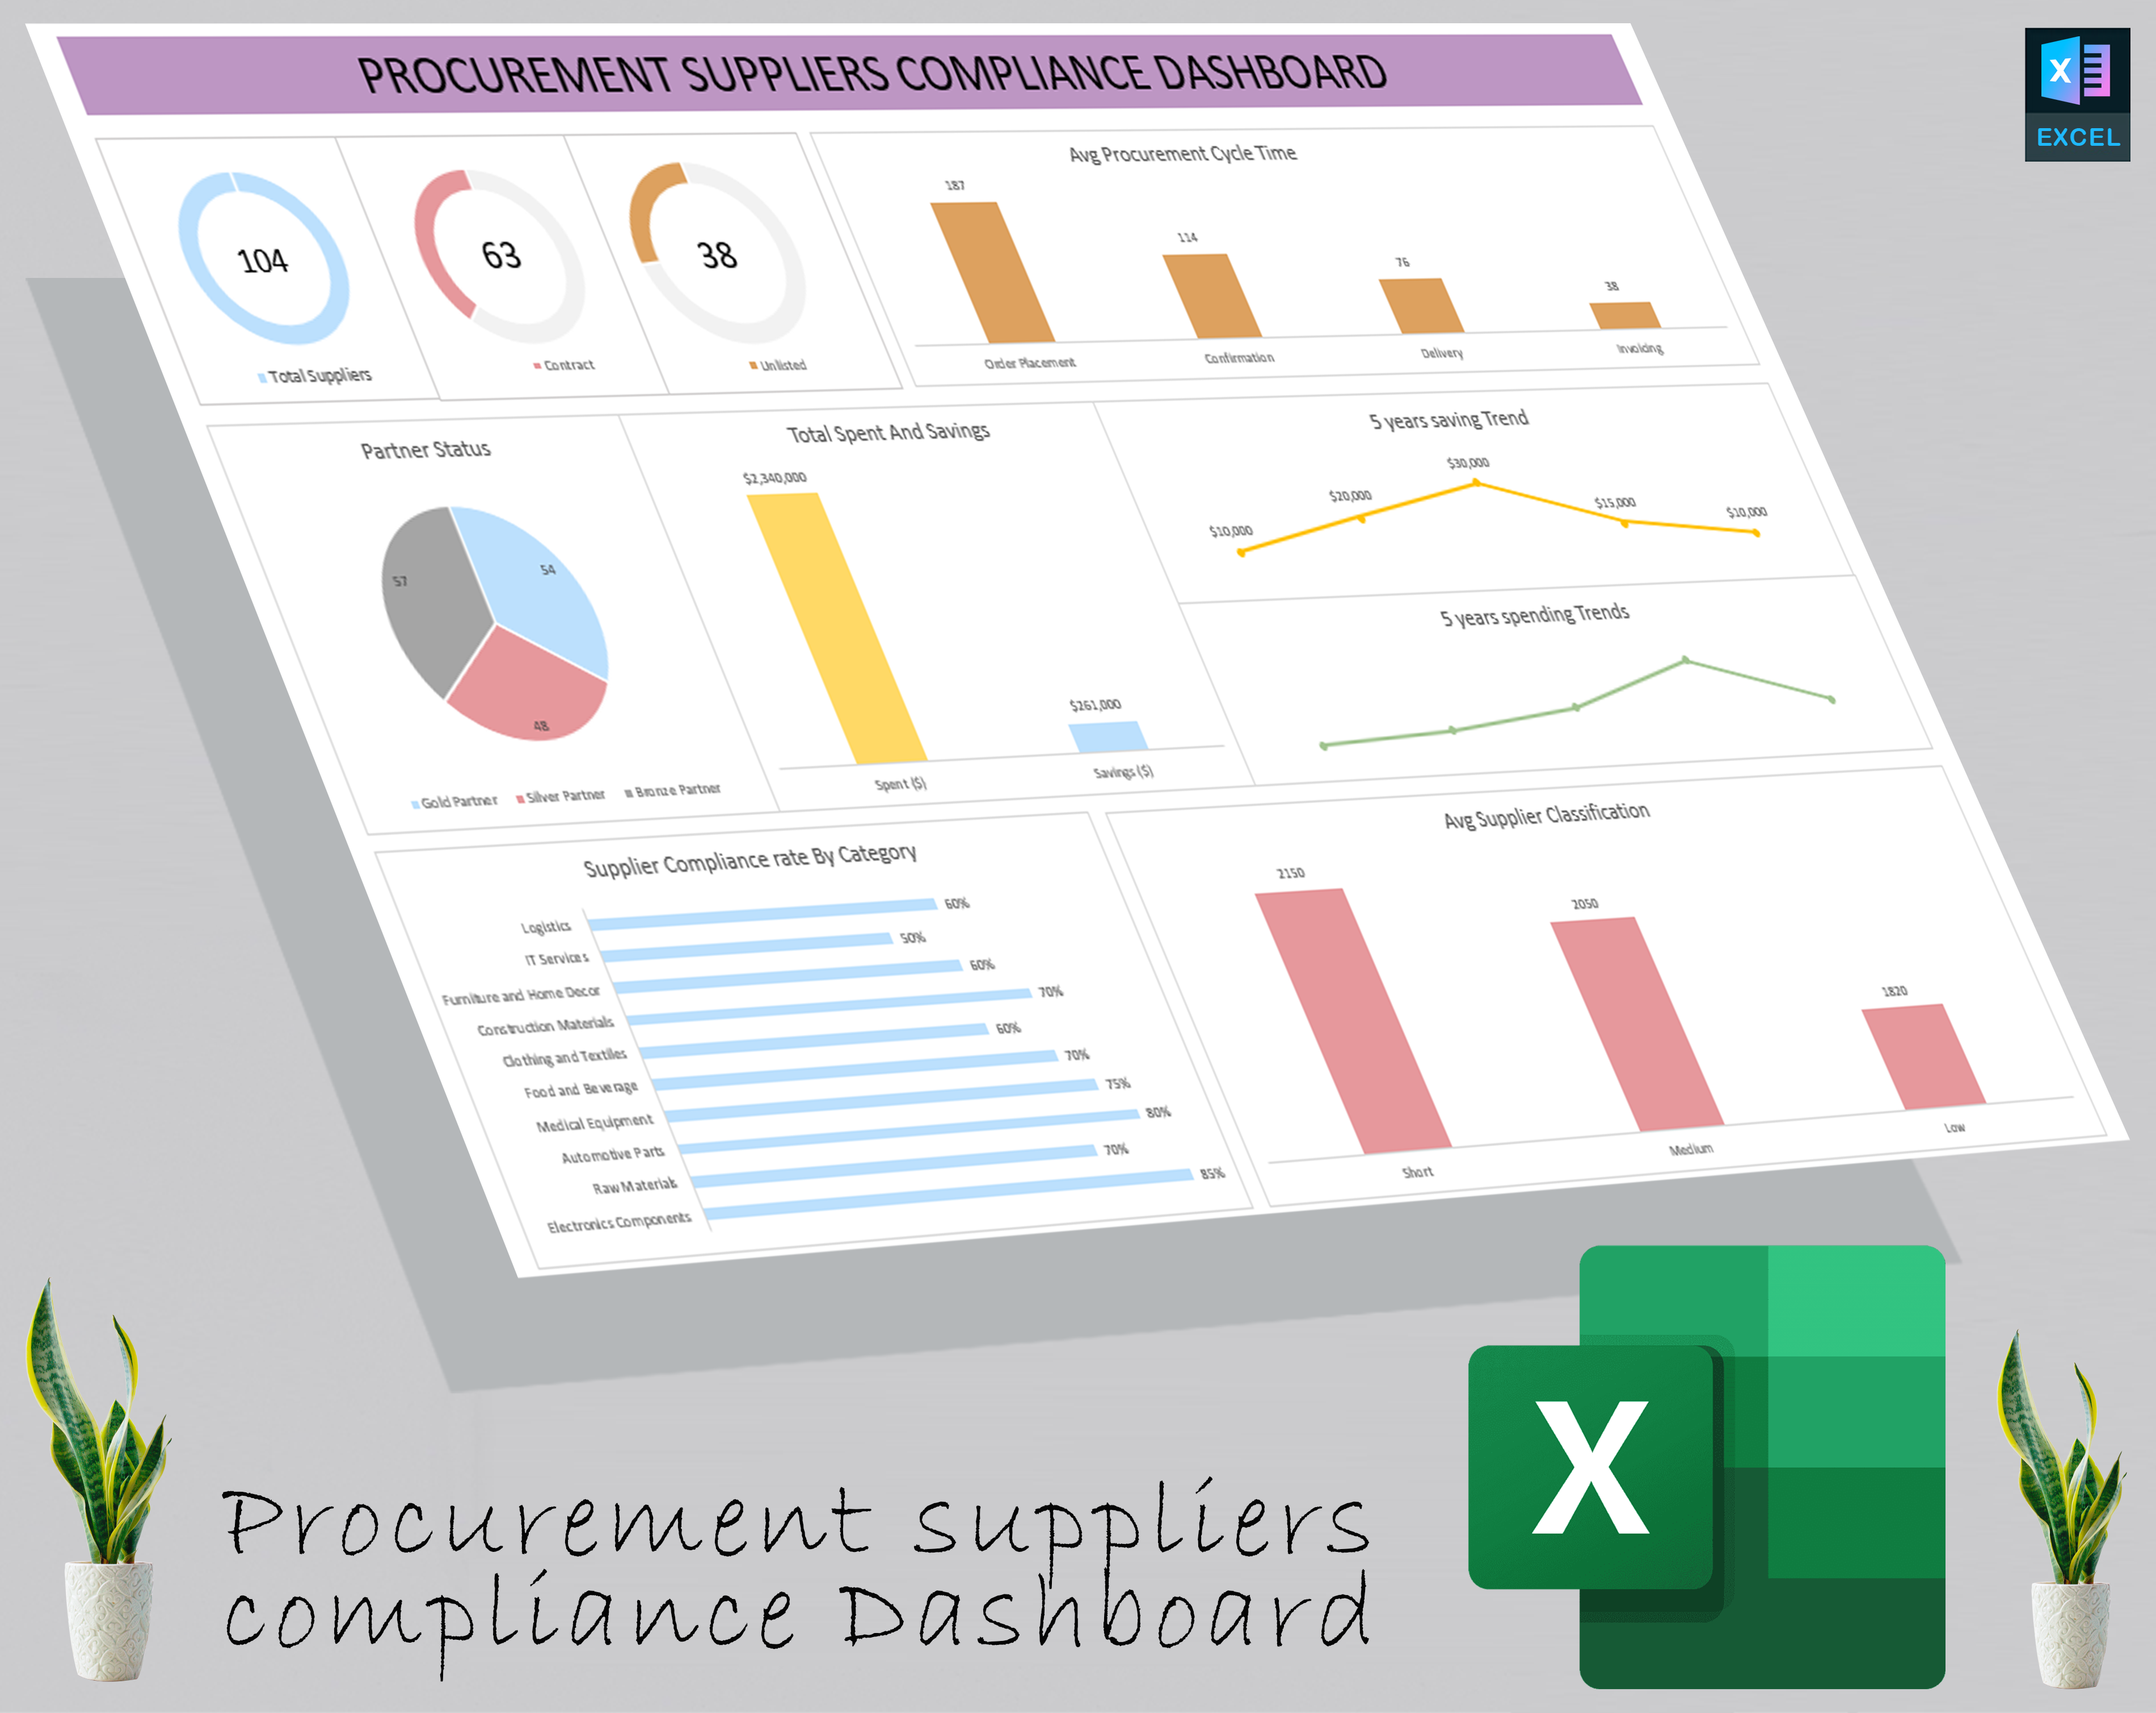 Procurement suppliers compliance Dashboard